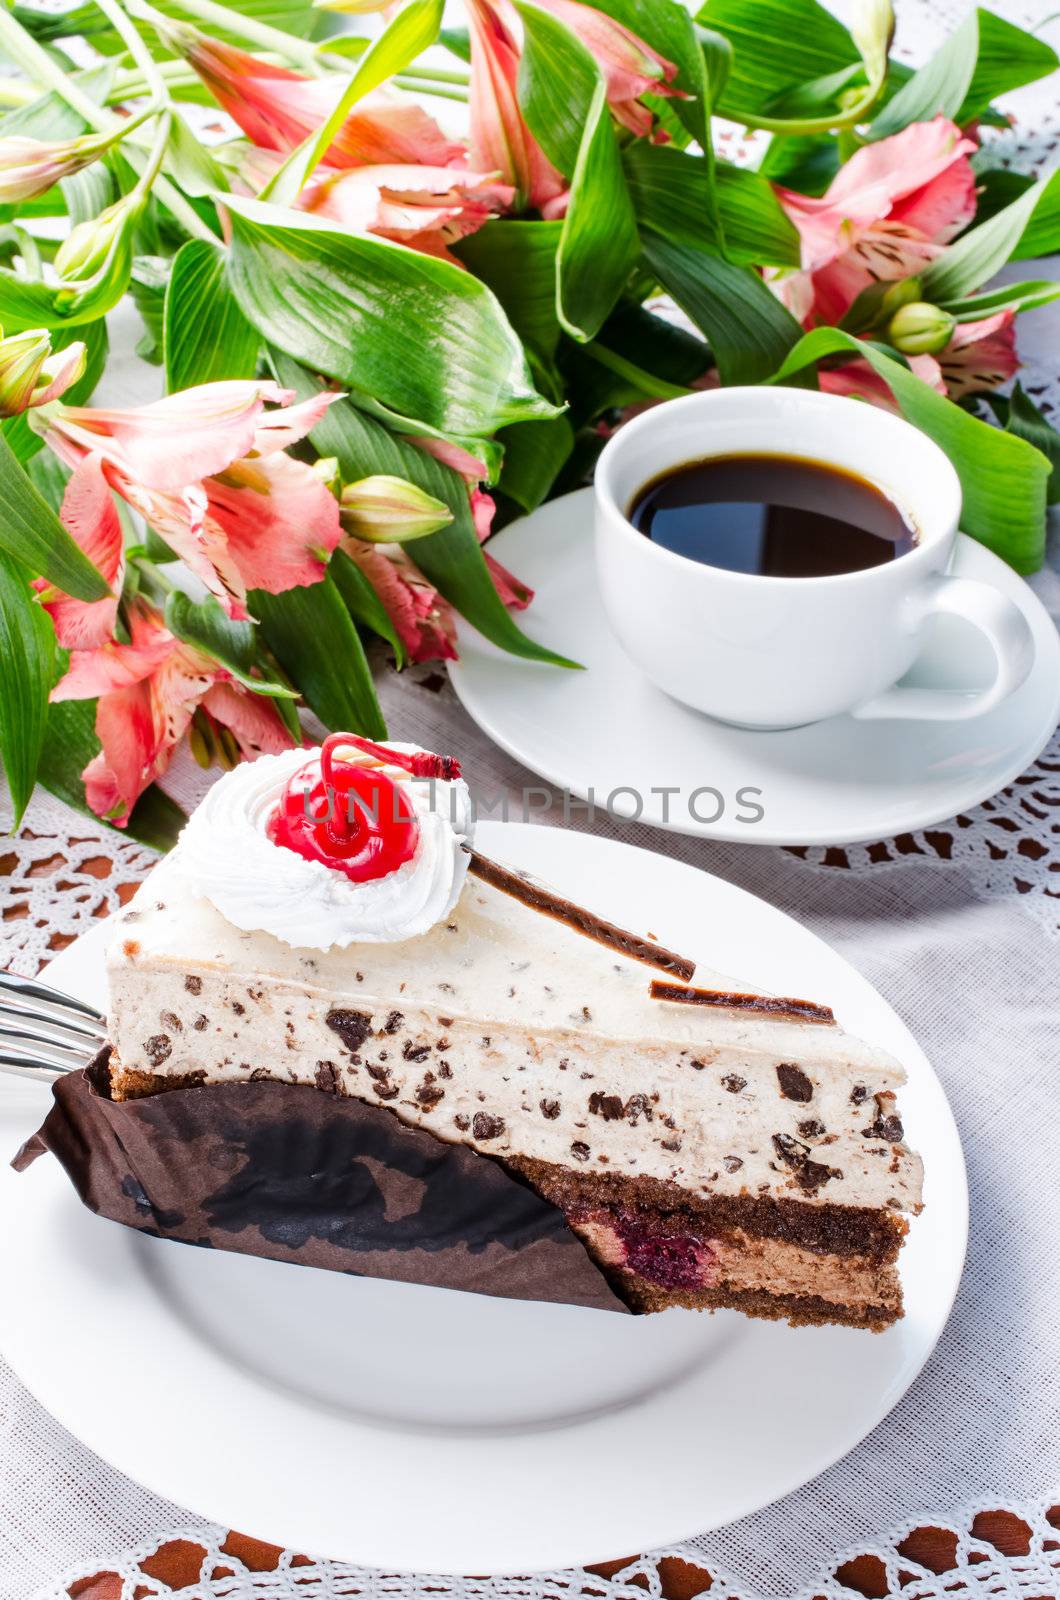 Cake and coffee by Nanisimova